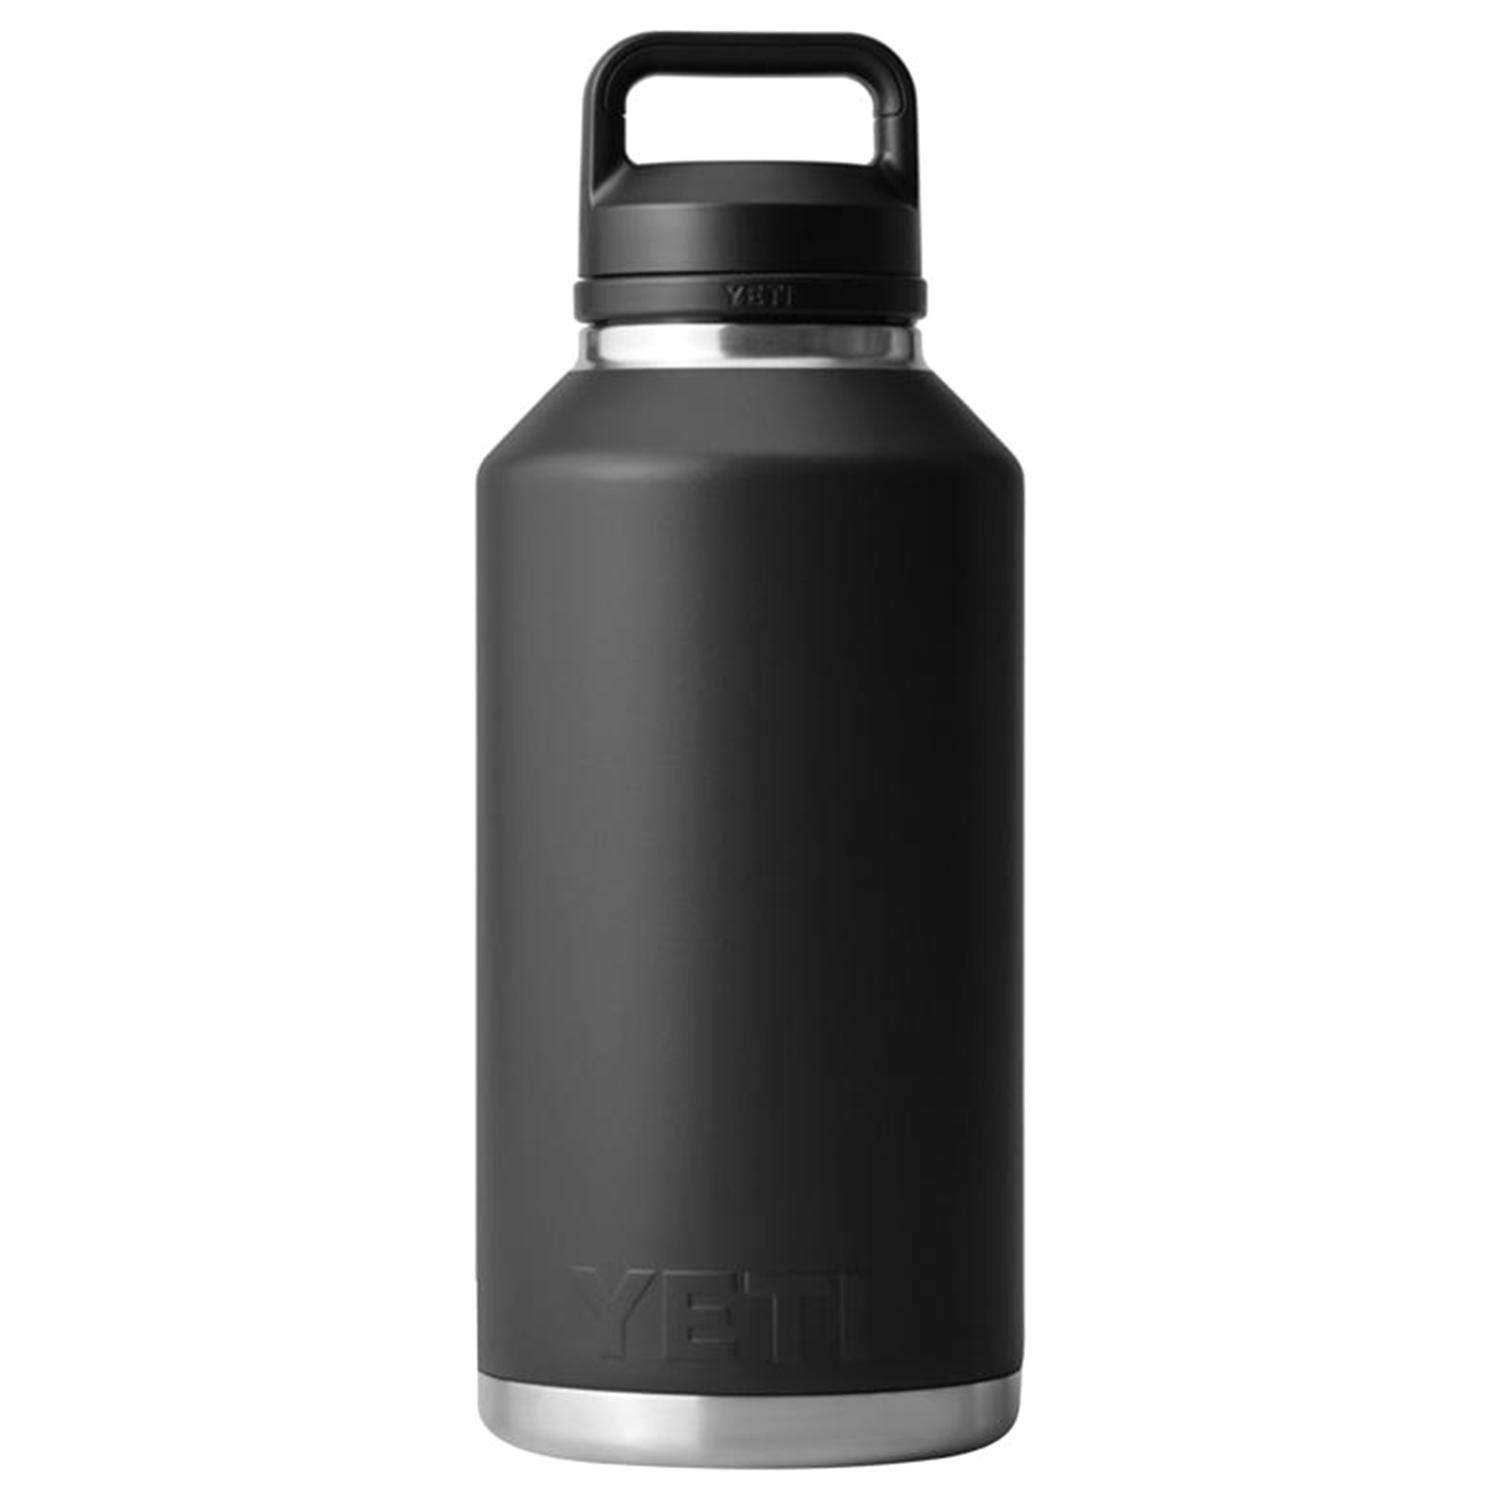 Black yeti water bottles - Crank Cycles